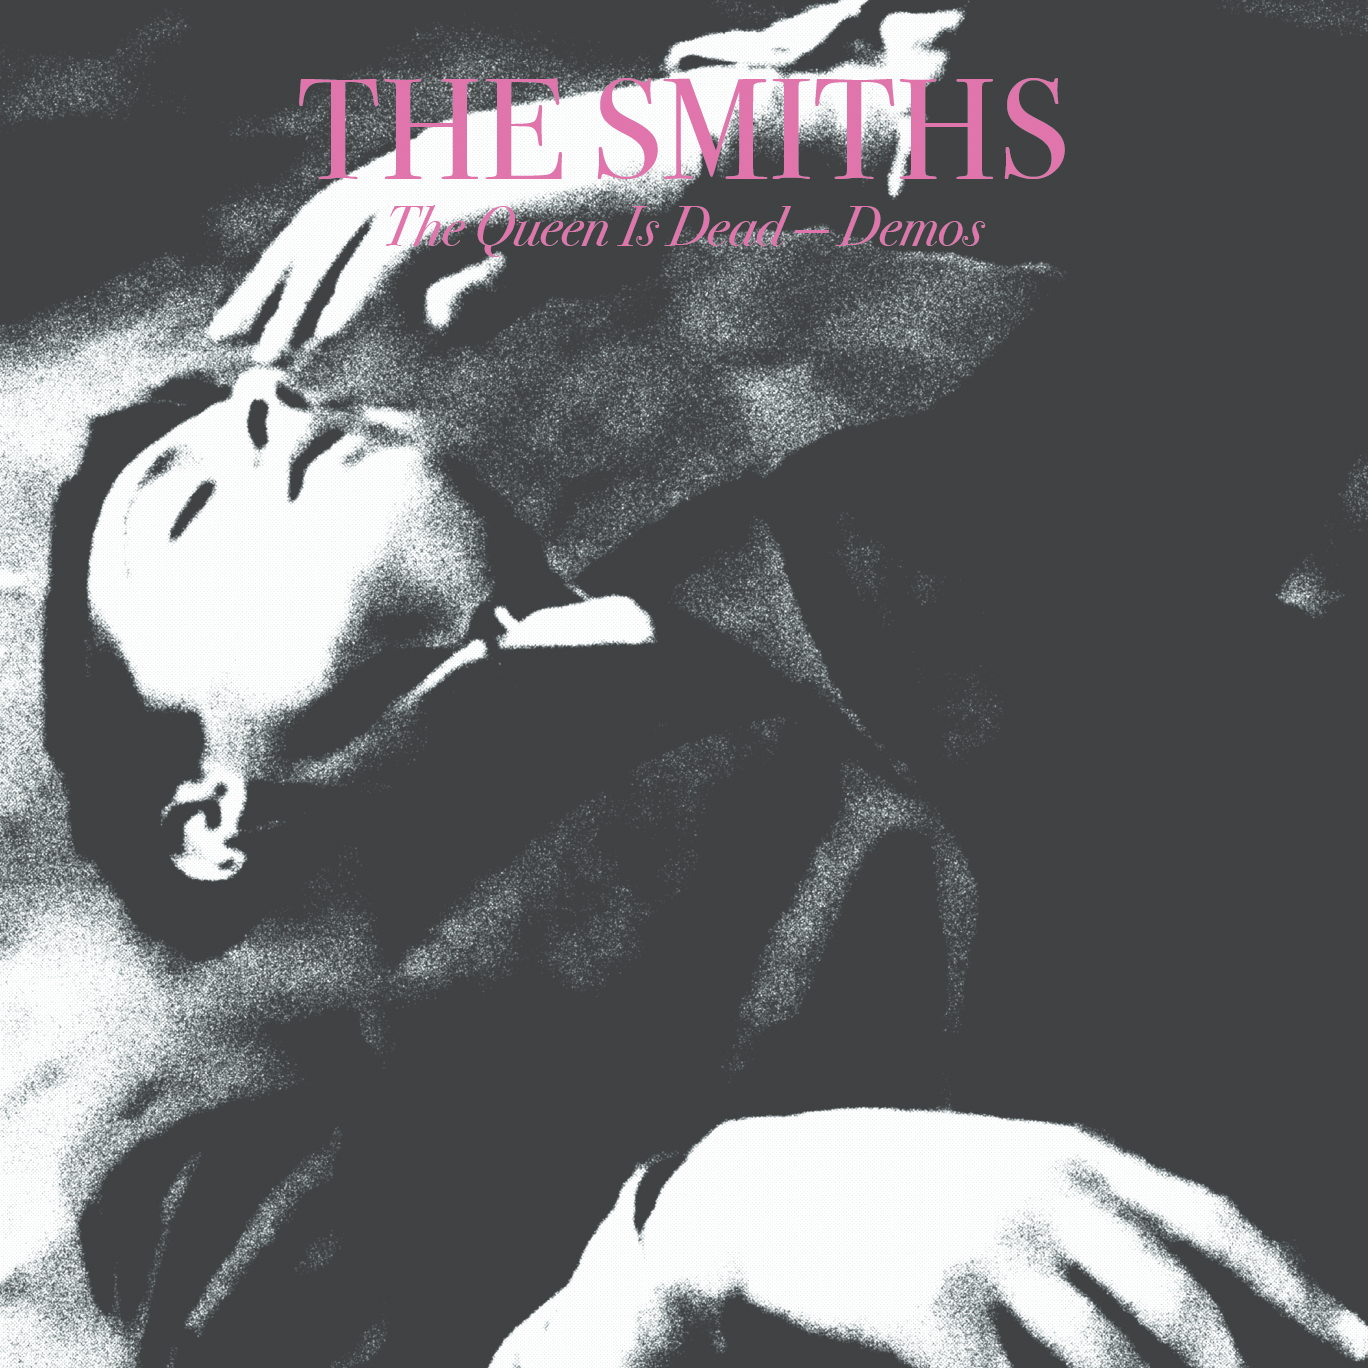 Smiths, The "The Queen in Dead - Demos" LP